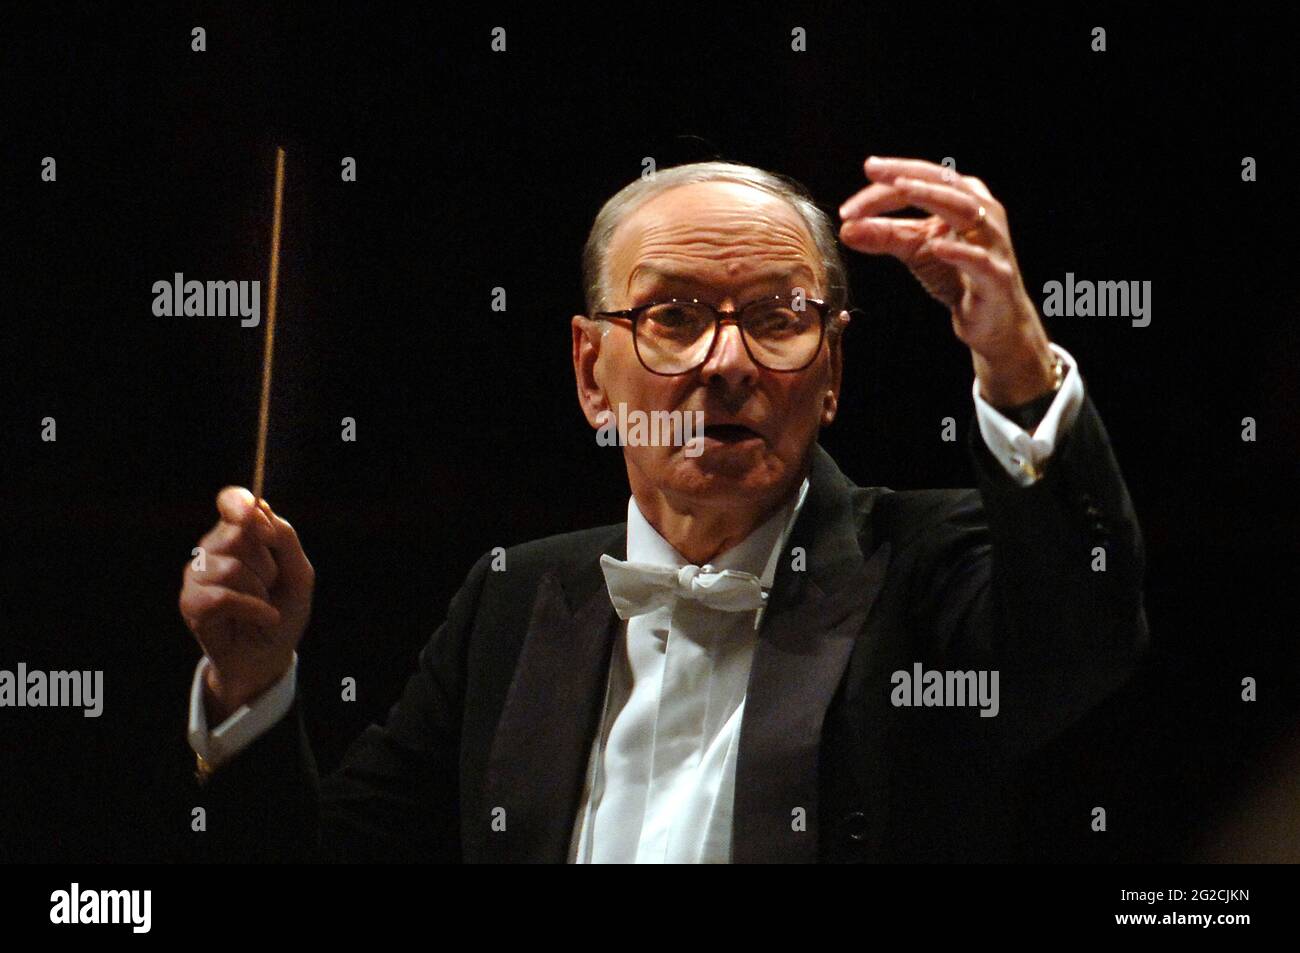 Italy, Brescia, december 16, 2007 : The conductor and composer Ennio Morricone in concert.   Photo © Matteo Biatta/Sintesi/Alamy Stock Photo Stock Photo